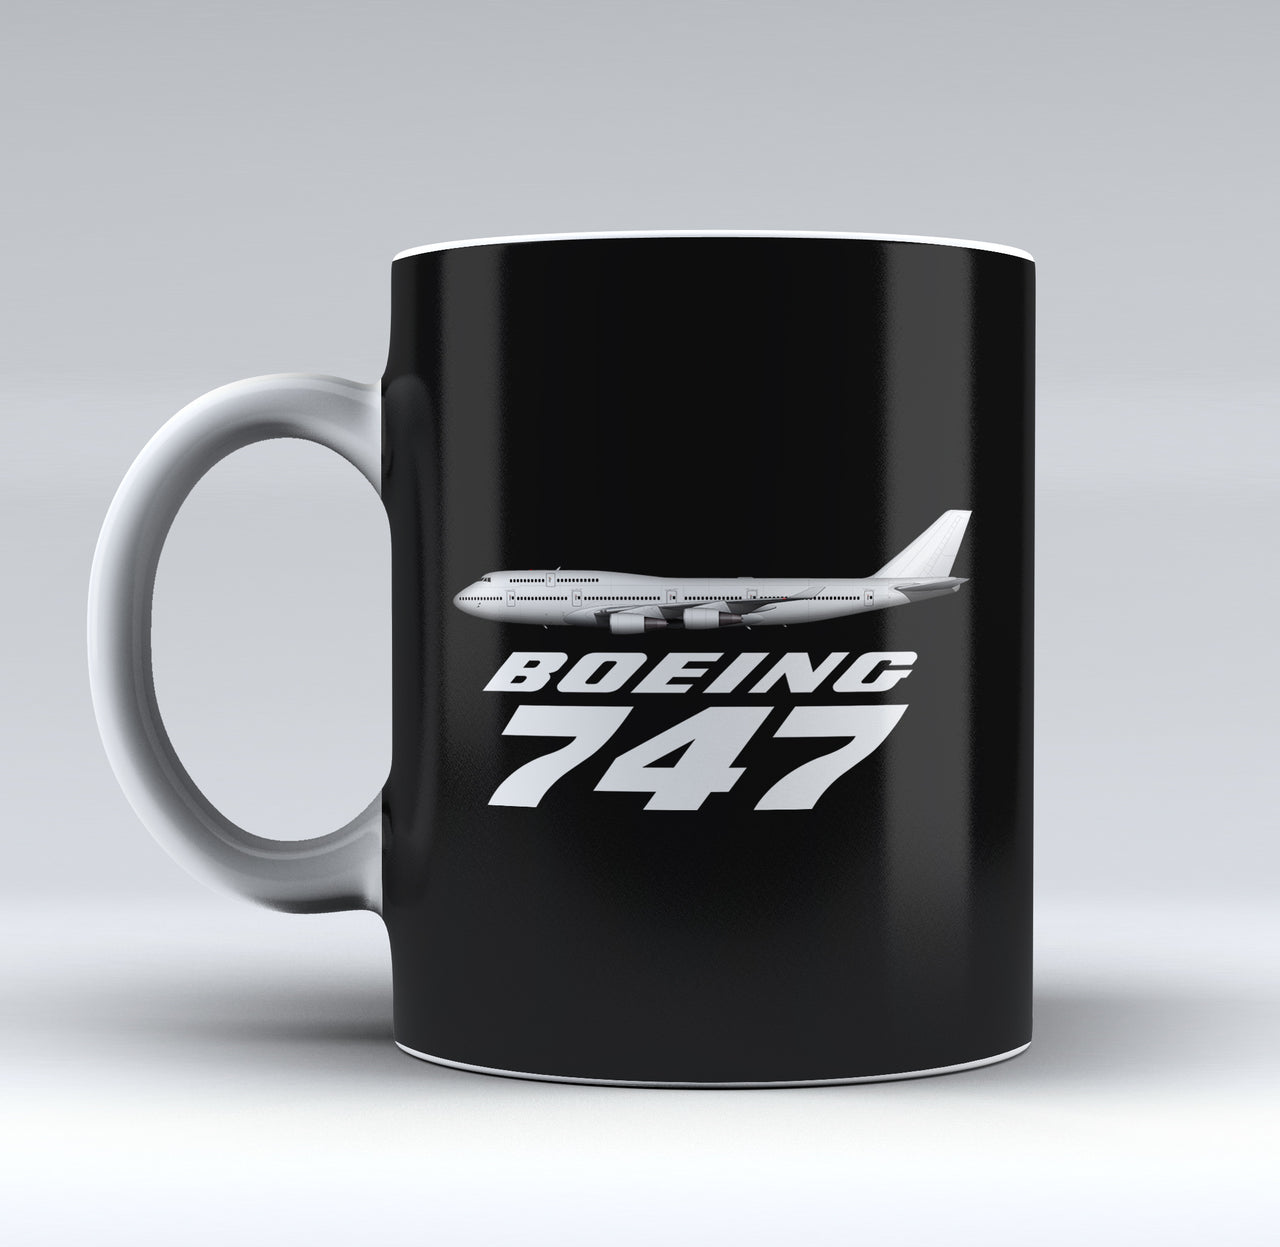 The Boeing 747 Designed Mugs